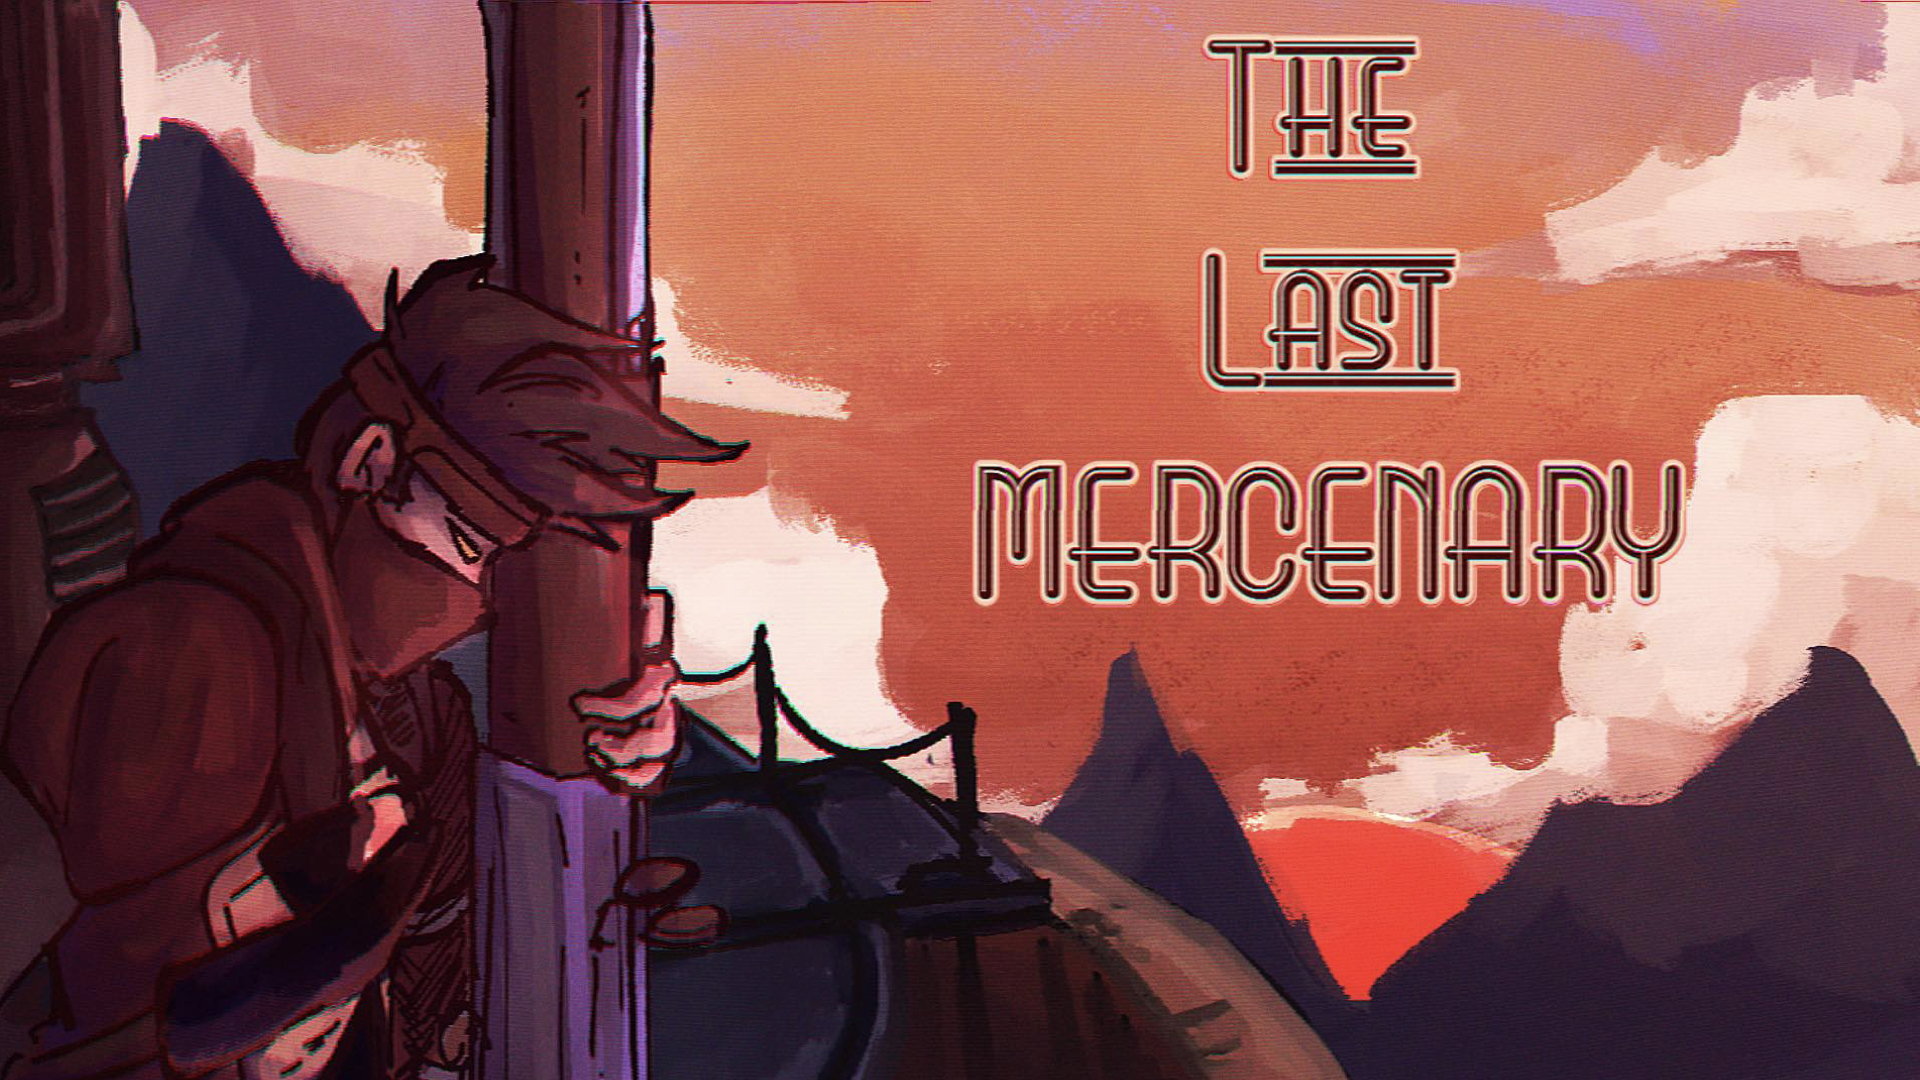 The Last Mercenary